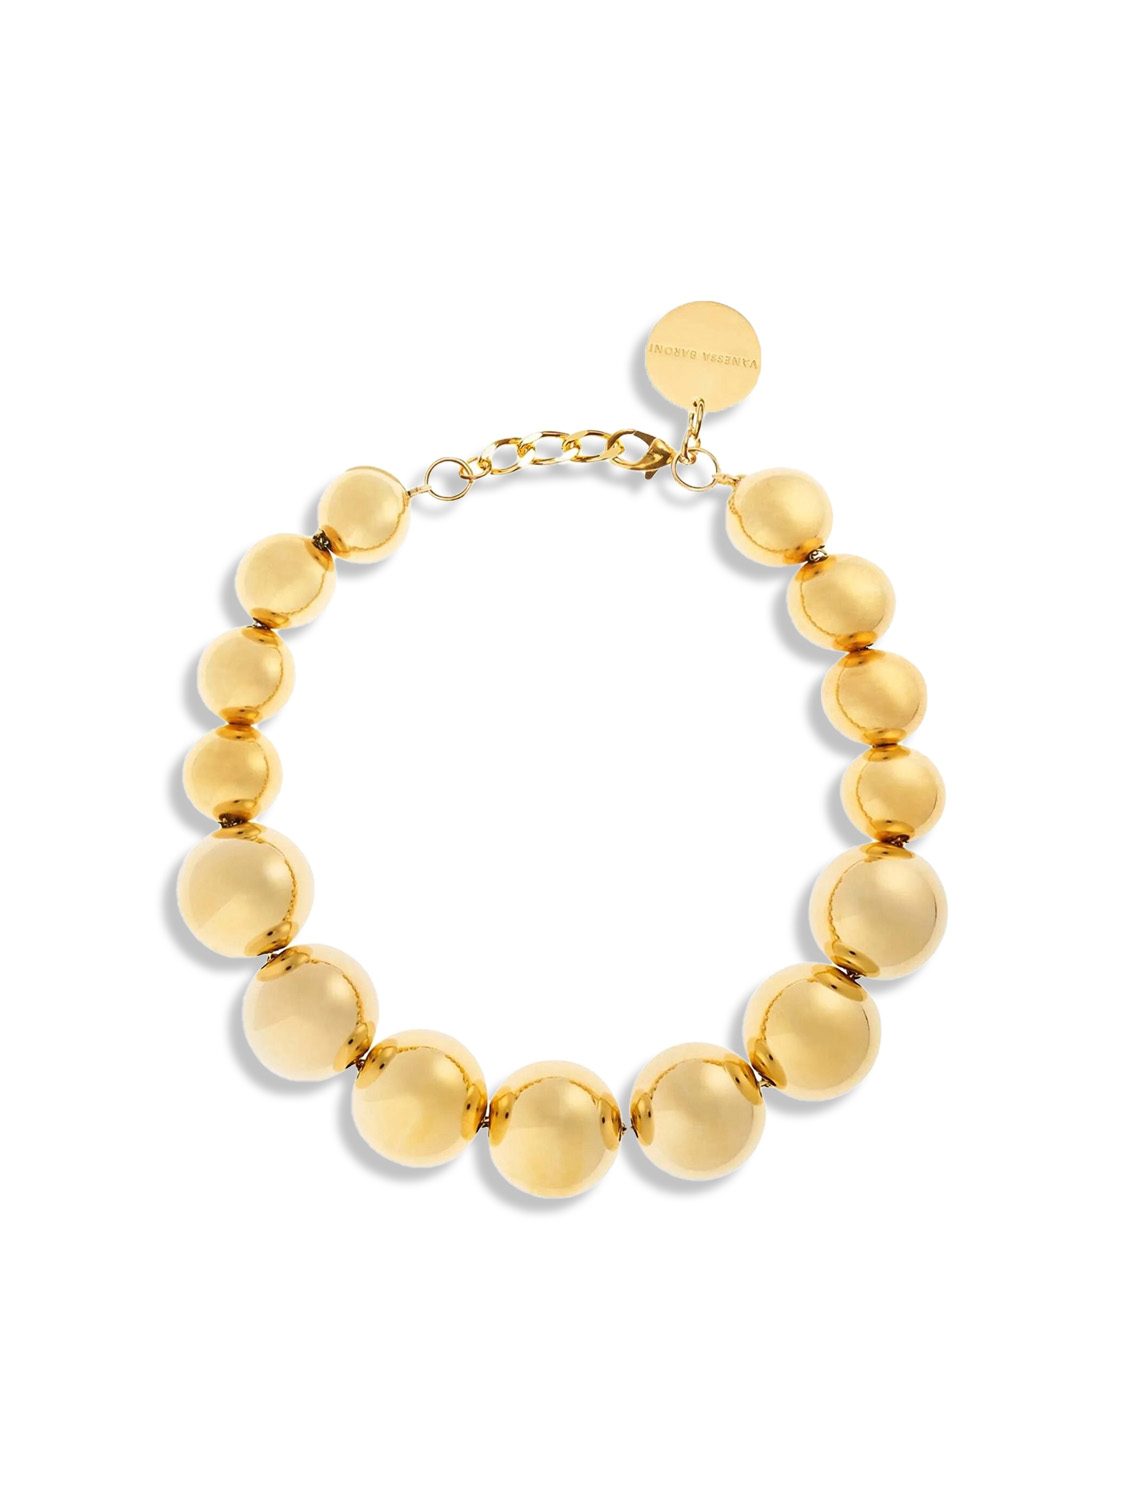 Beads - chain in ball design